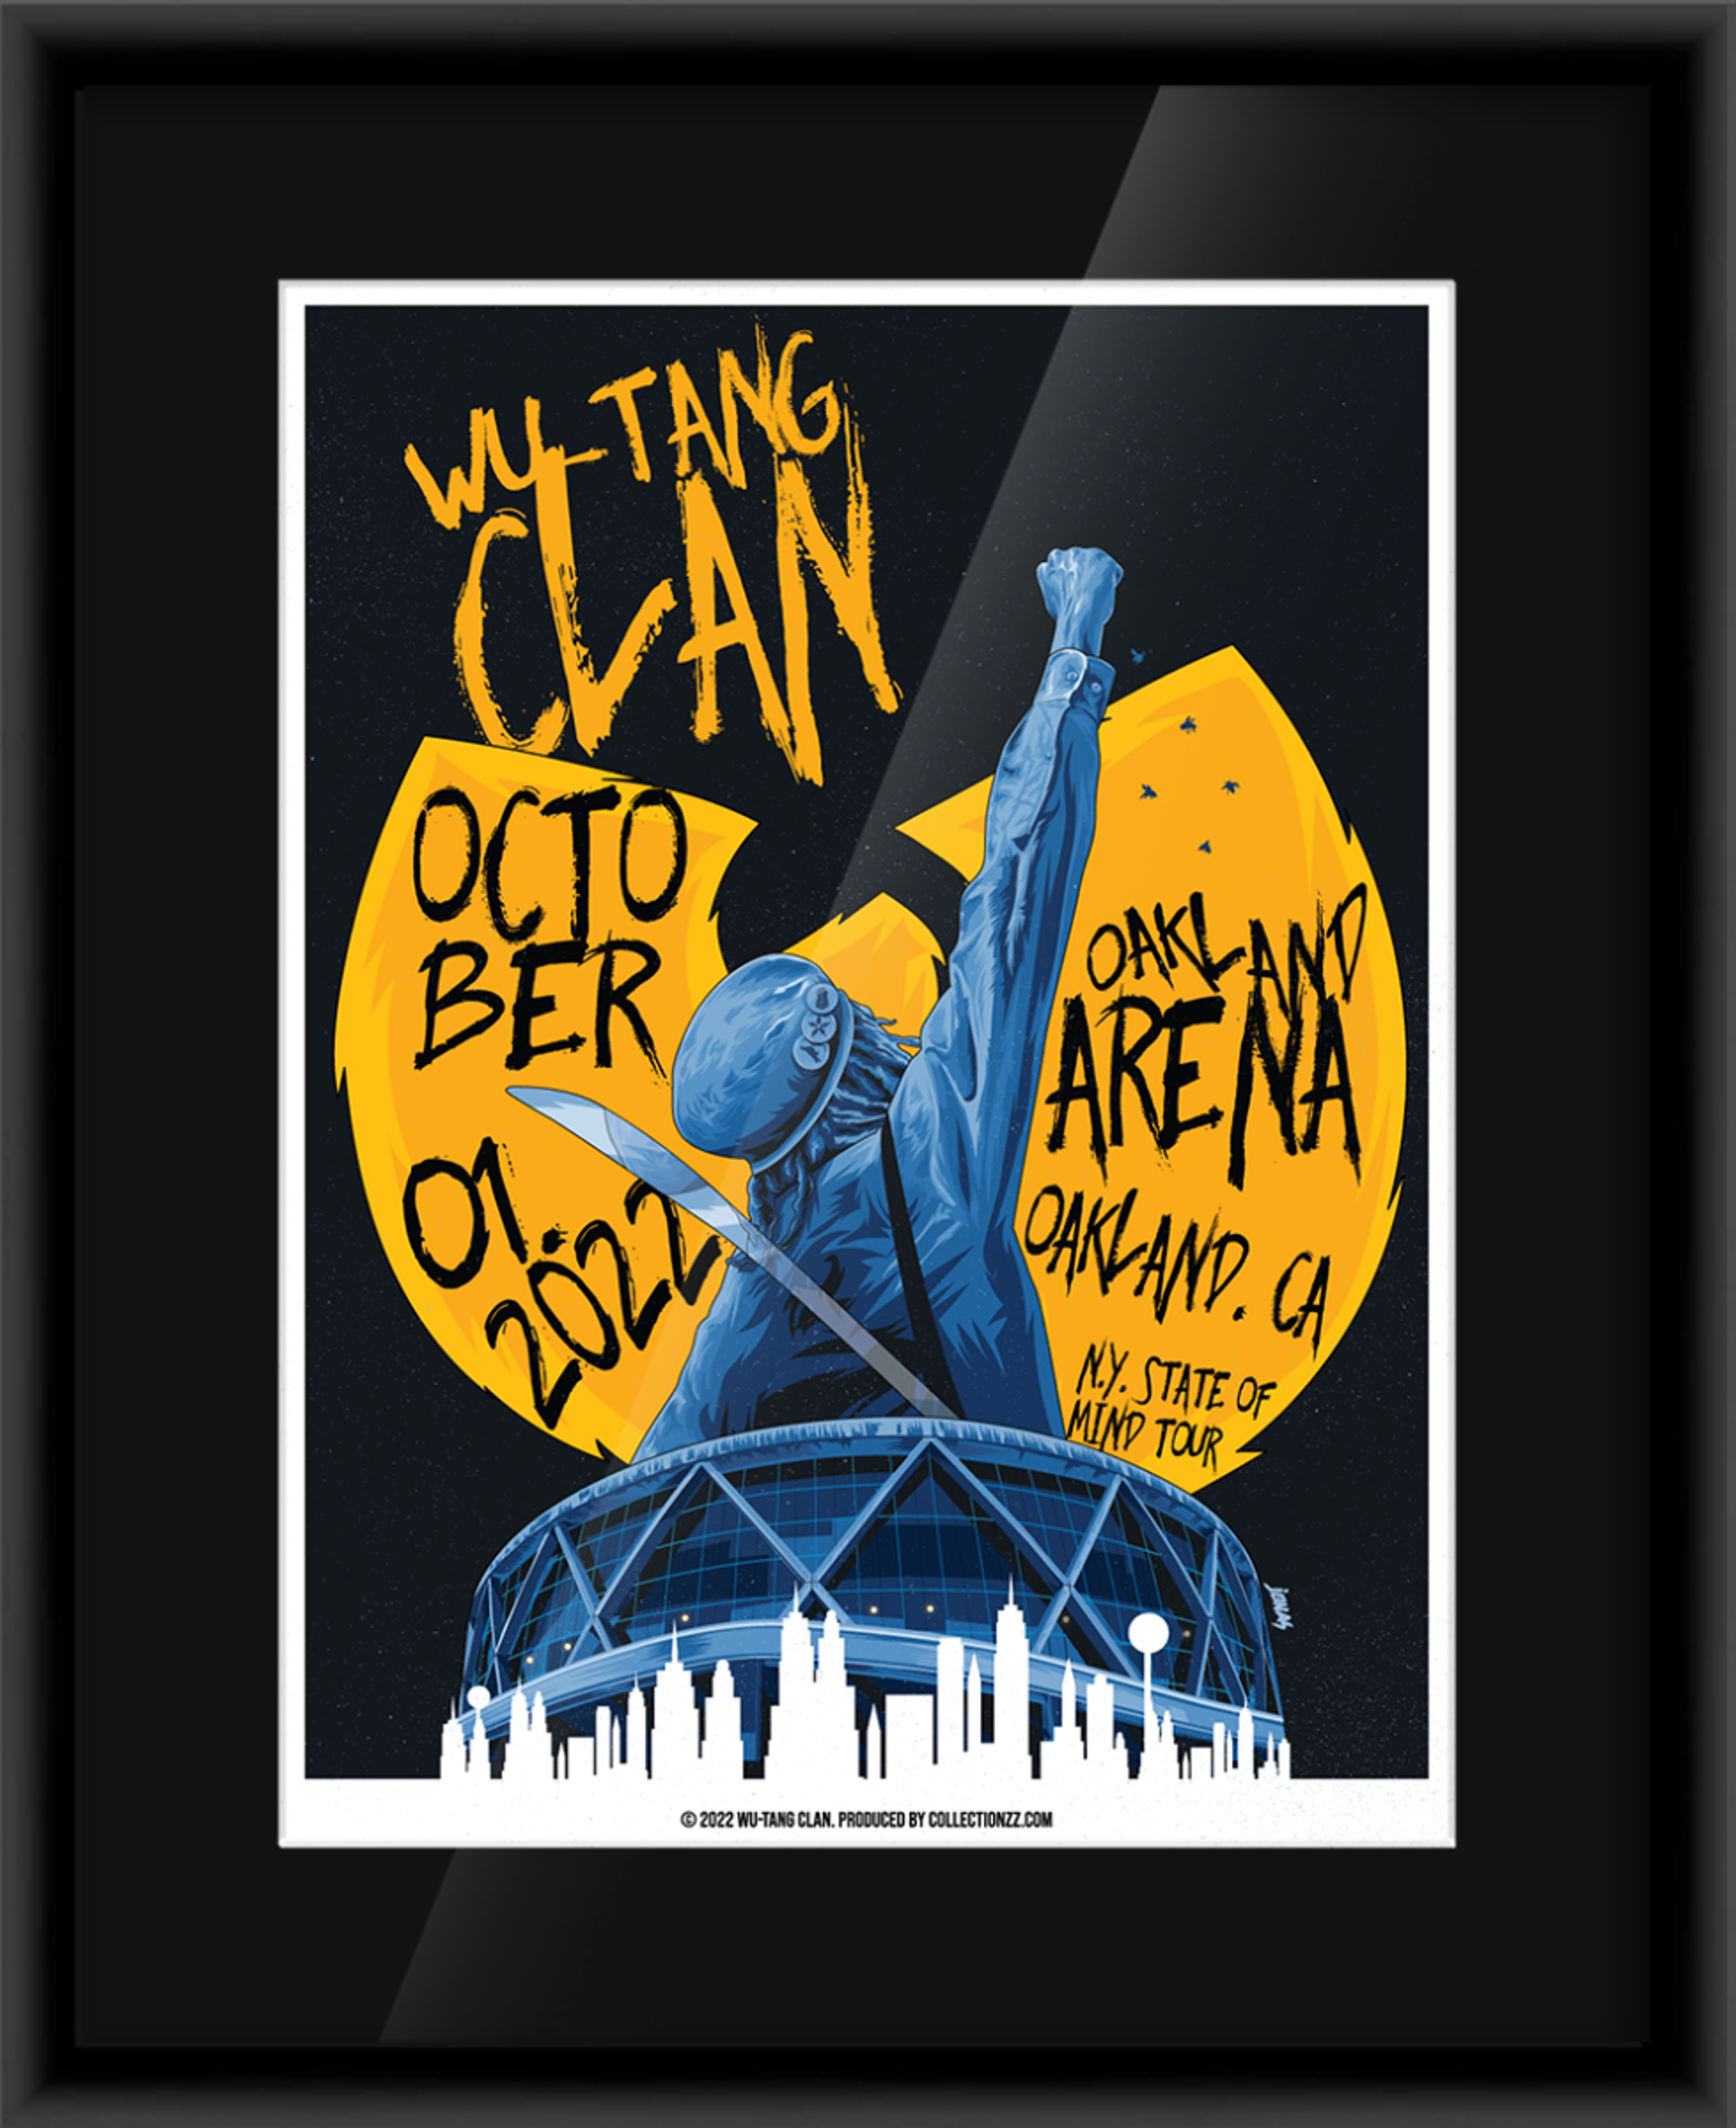 Alternate View 1 of Wu-Tang Clan Oakland October 1, 2022 Print